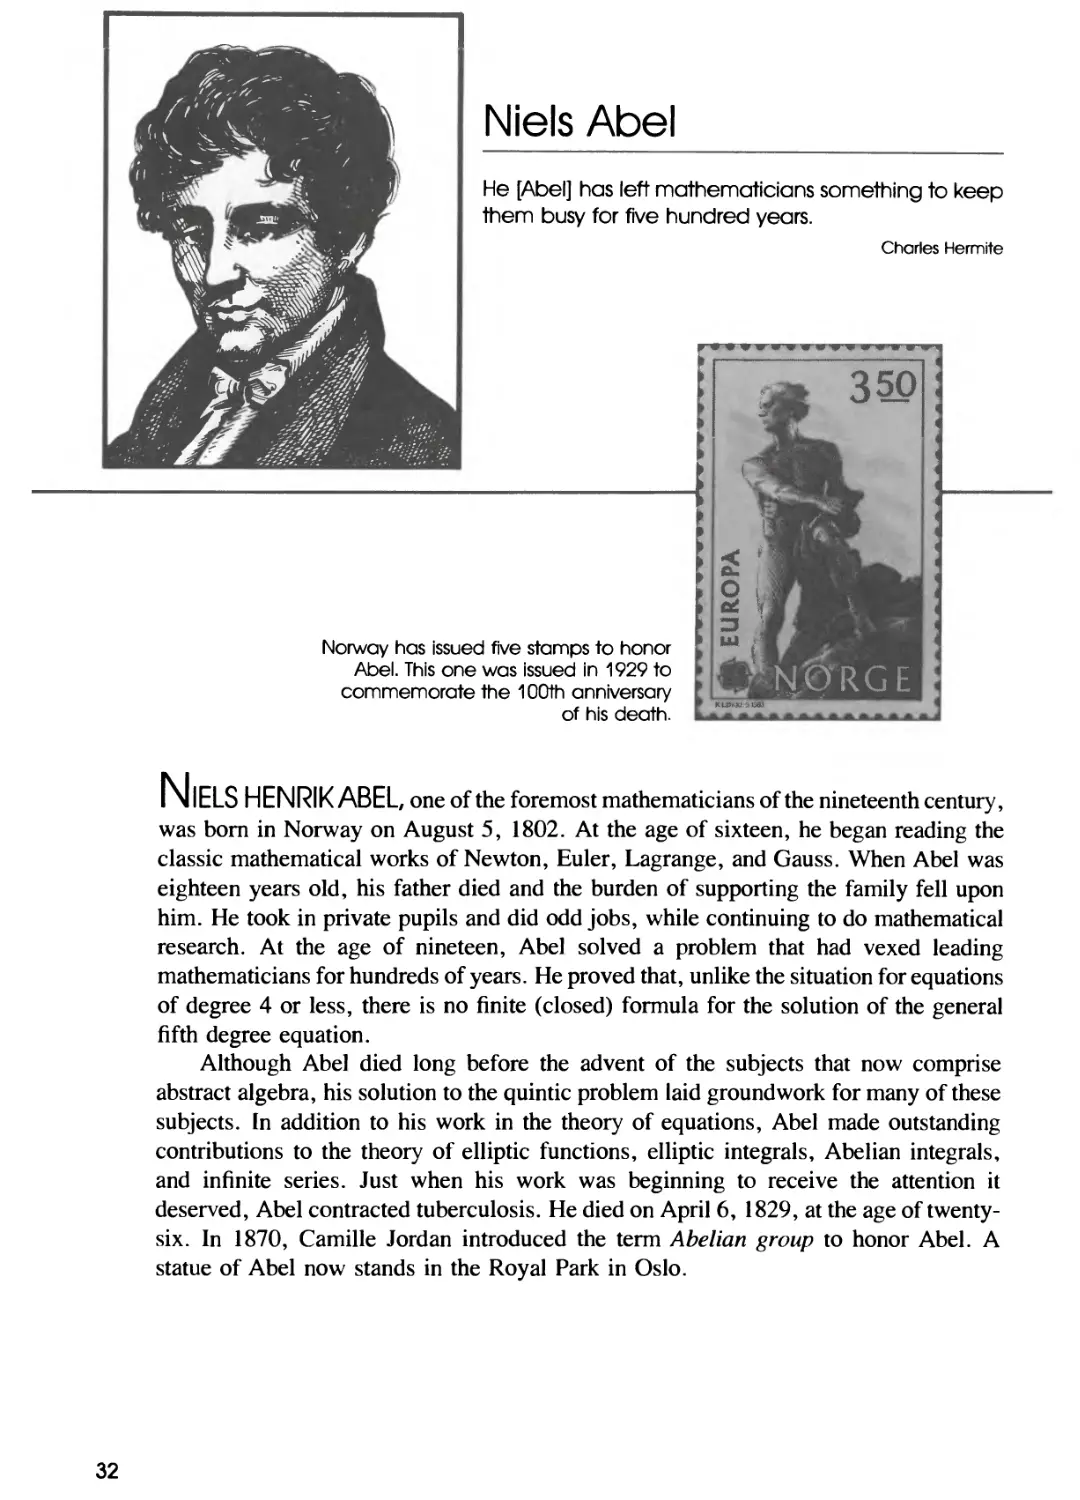 Biography of Niels Abel